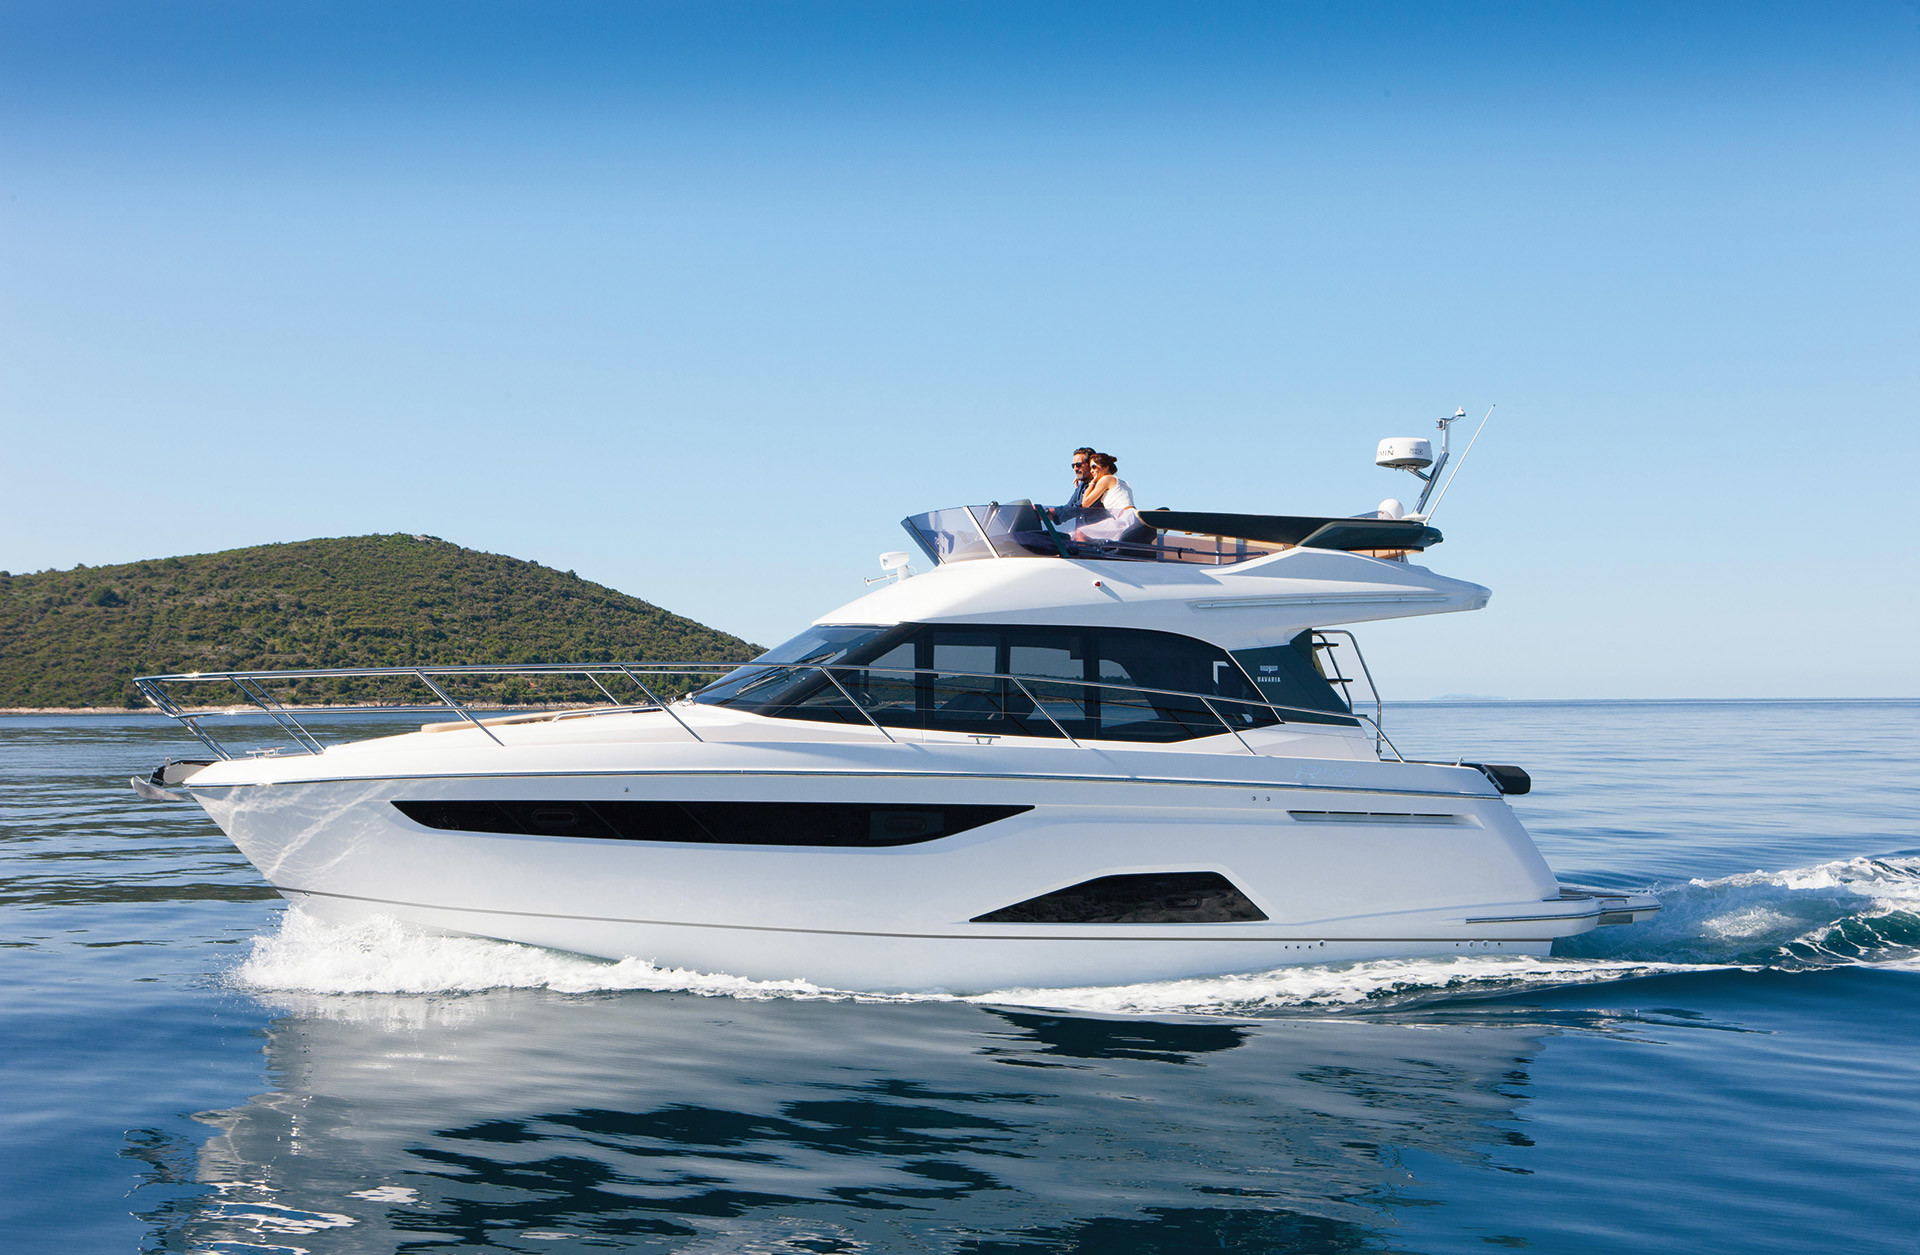 Power boat FOR CHARTER, year 2017 brand Bavaria and model R40 Fly, available in Marina Port de Mallorca Palma Mallorca España